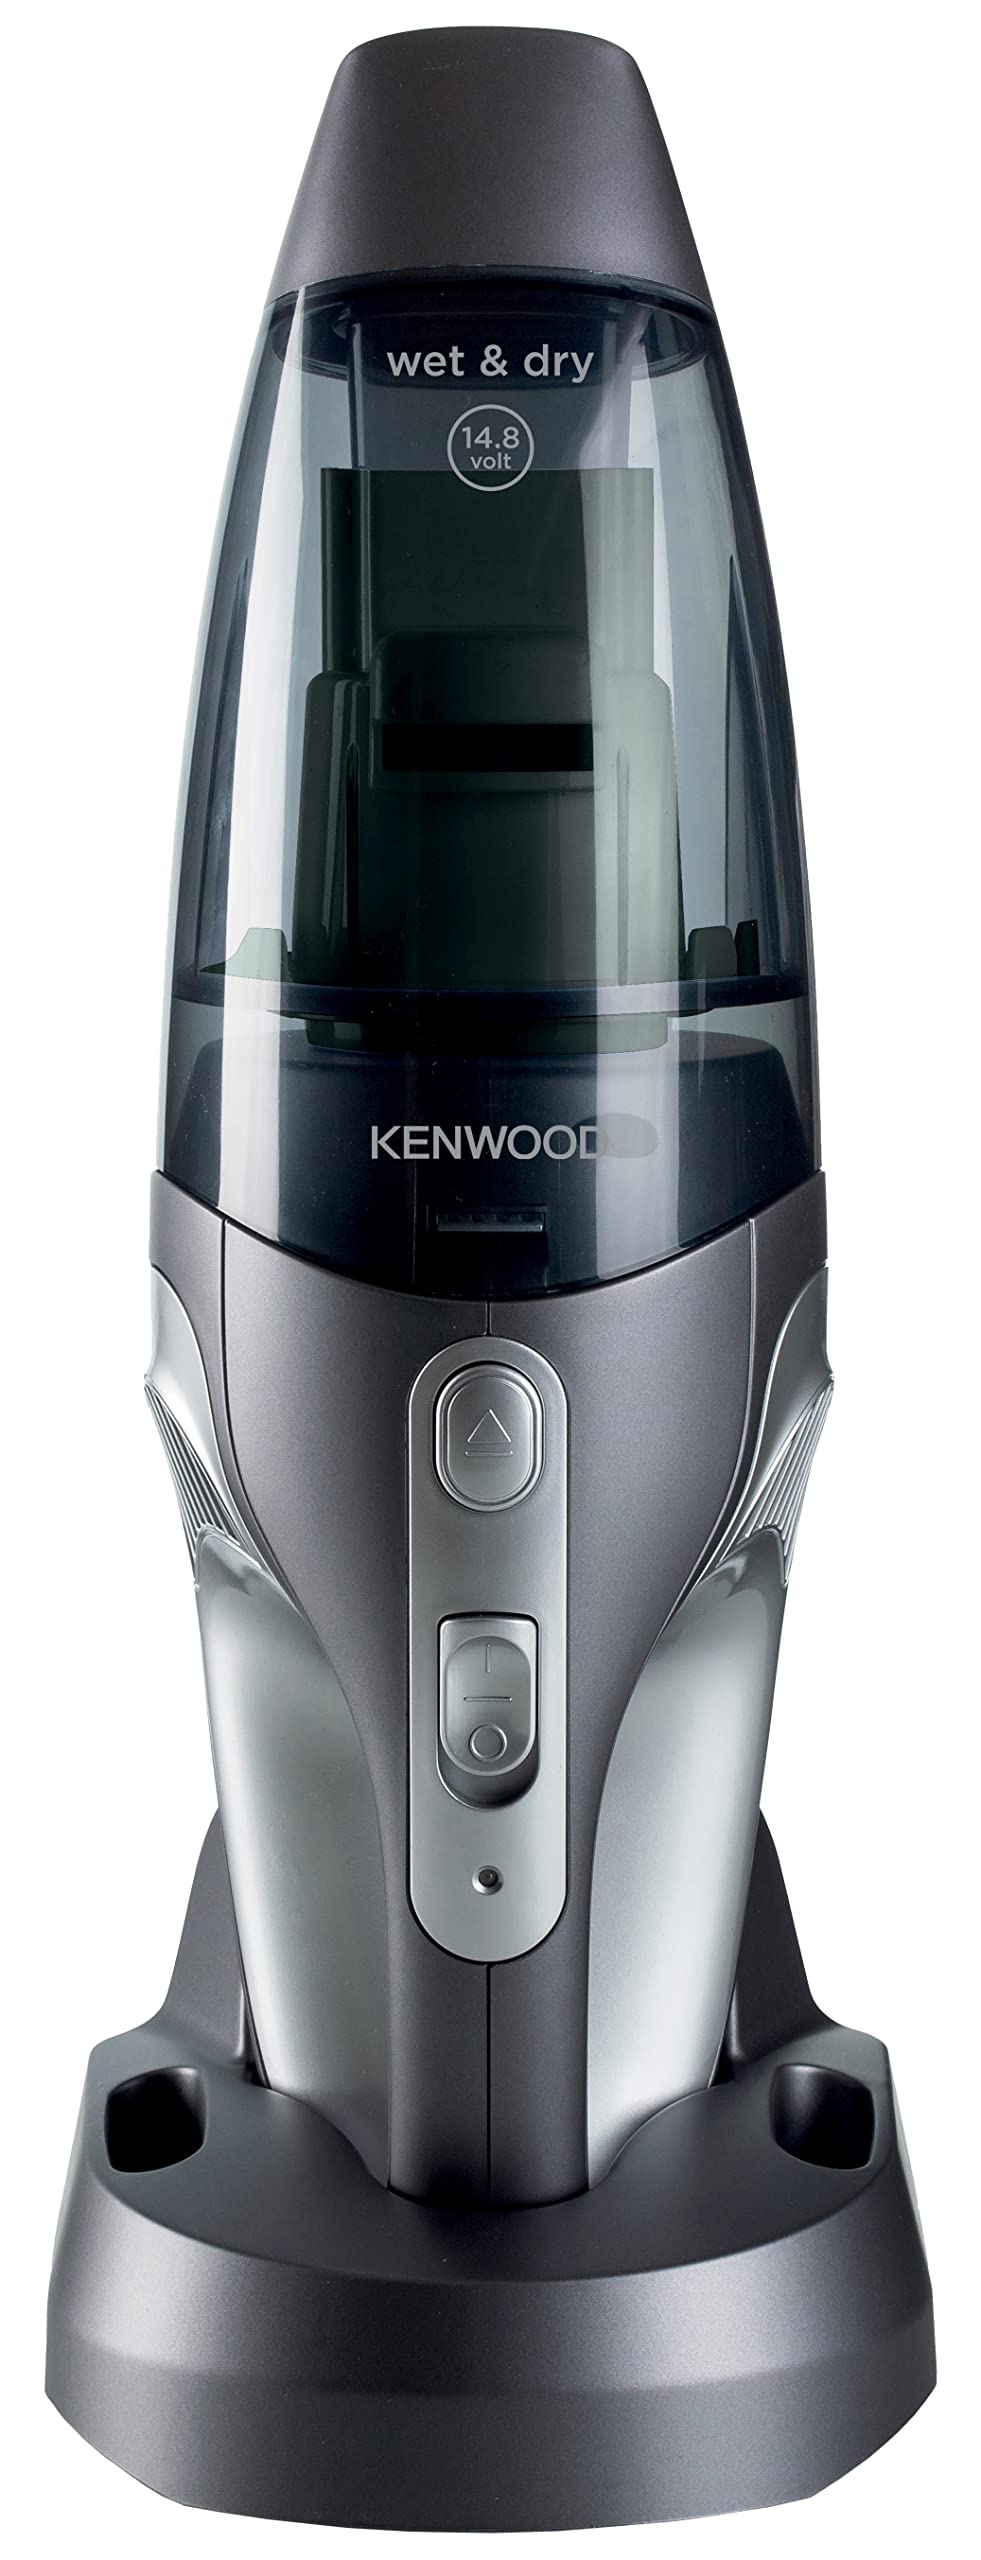 Kenwood Wet & Dry Cordless Handheld Vacuum Cleaner With 14.8V Lithium-Ion Battery, 500ml Dust Capacity  مكنسة كهربائية لاسلكية محمولة باليد لتشغيل رطب وجاف مع بطارية ليثيوم ايون بقدرة 14.8 فولت،